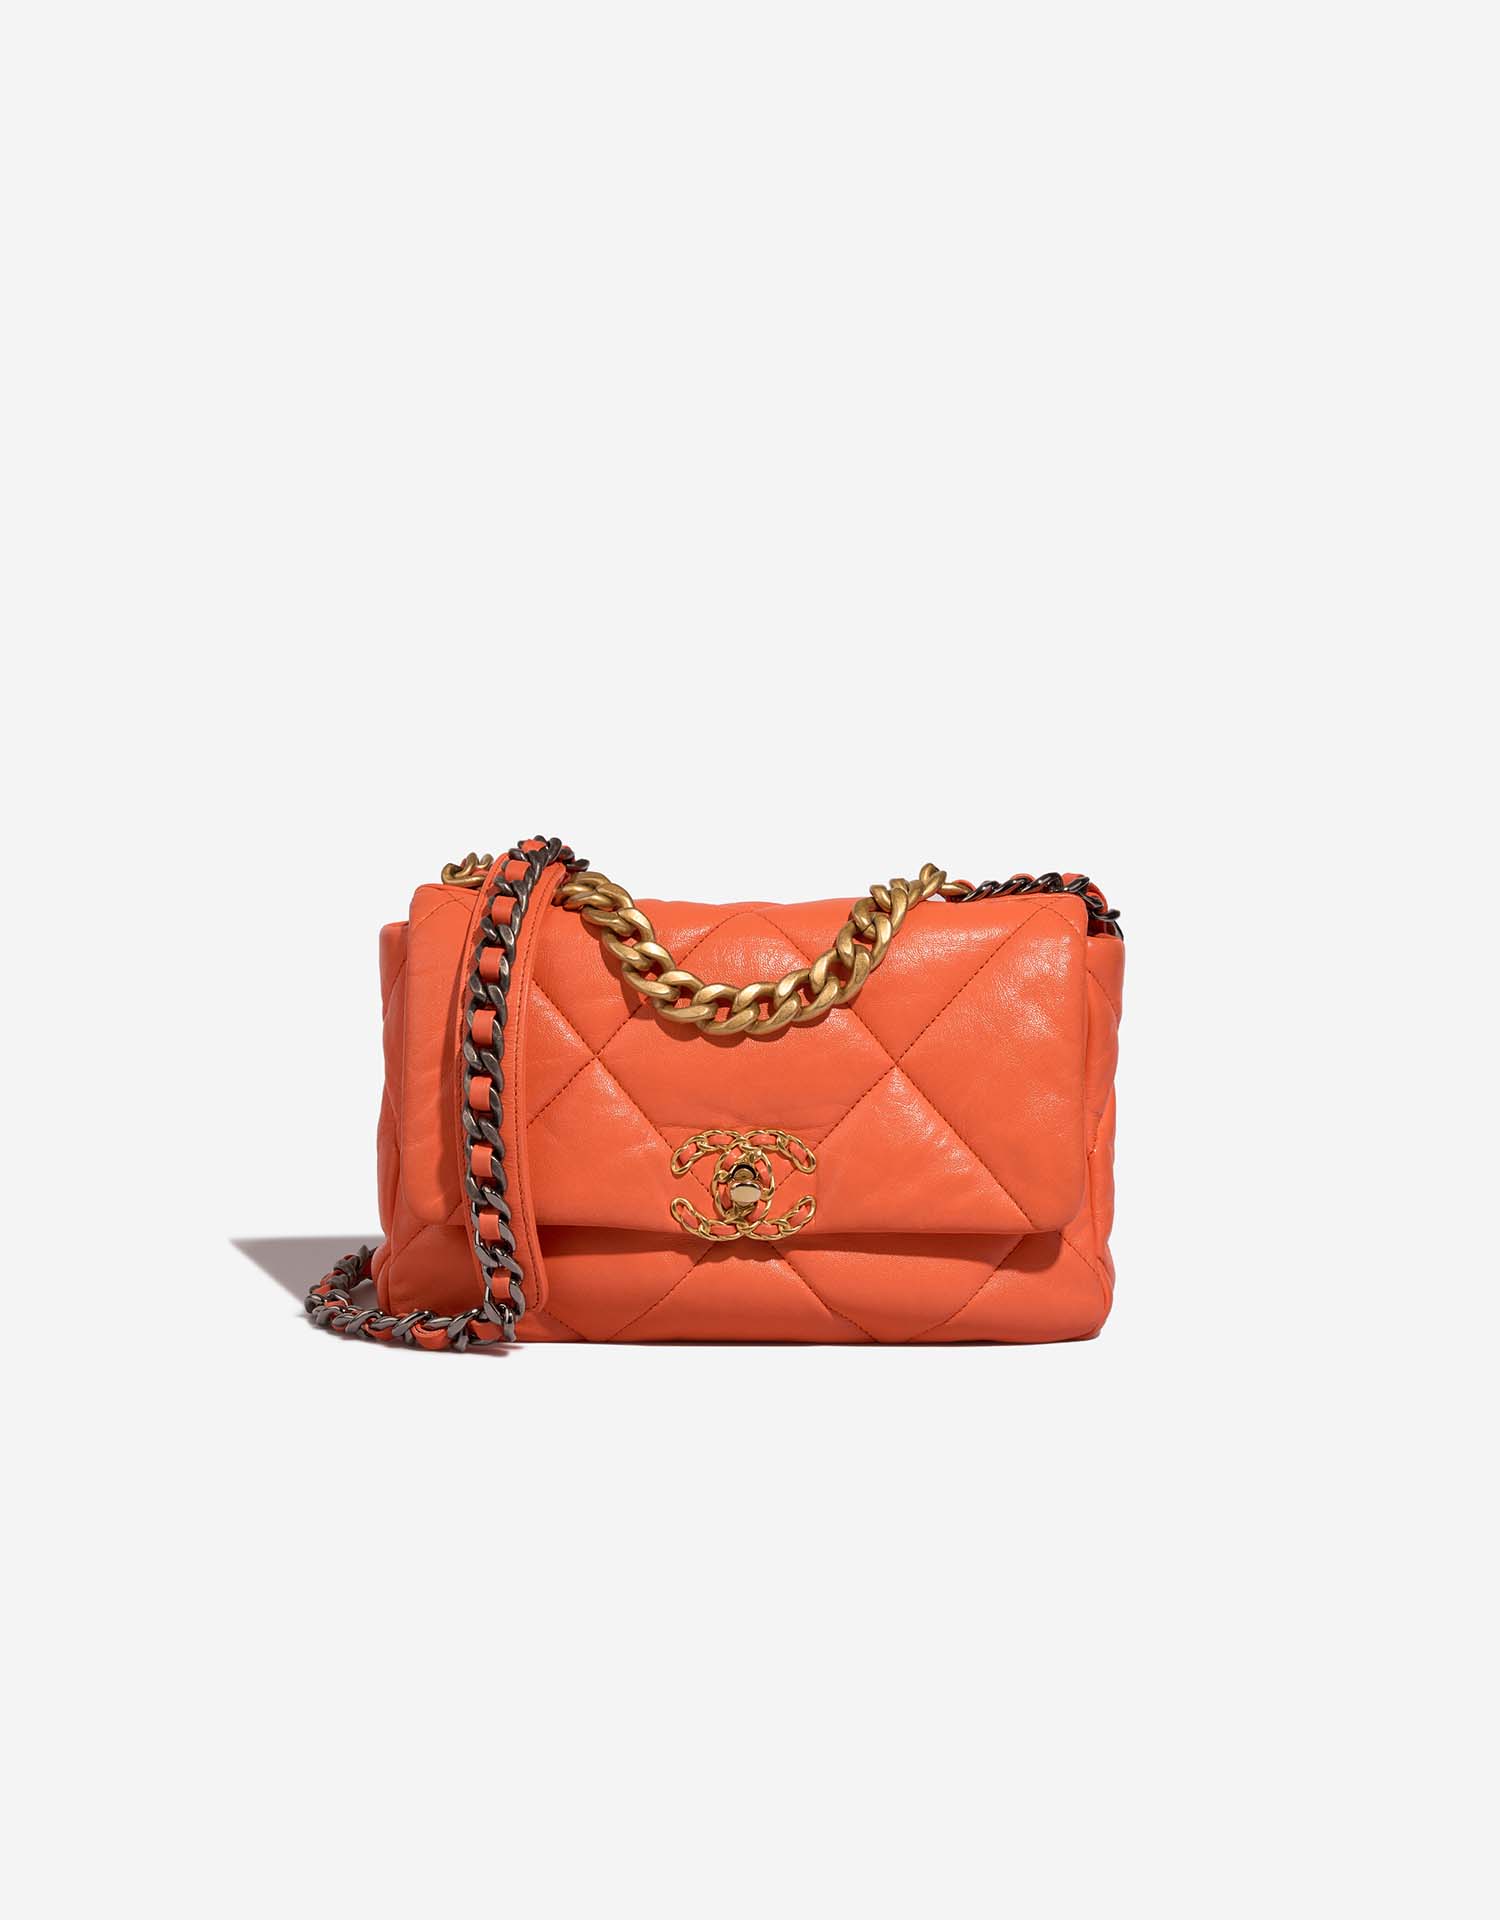 Chanel 19 Flap Bag Lamb Orange